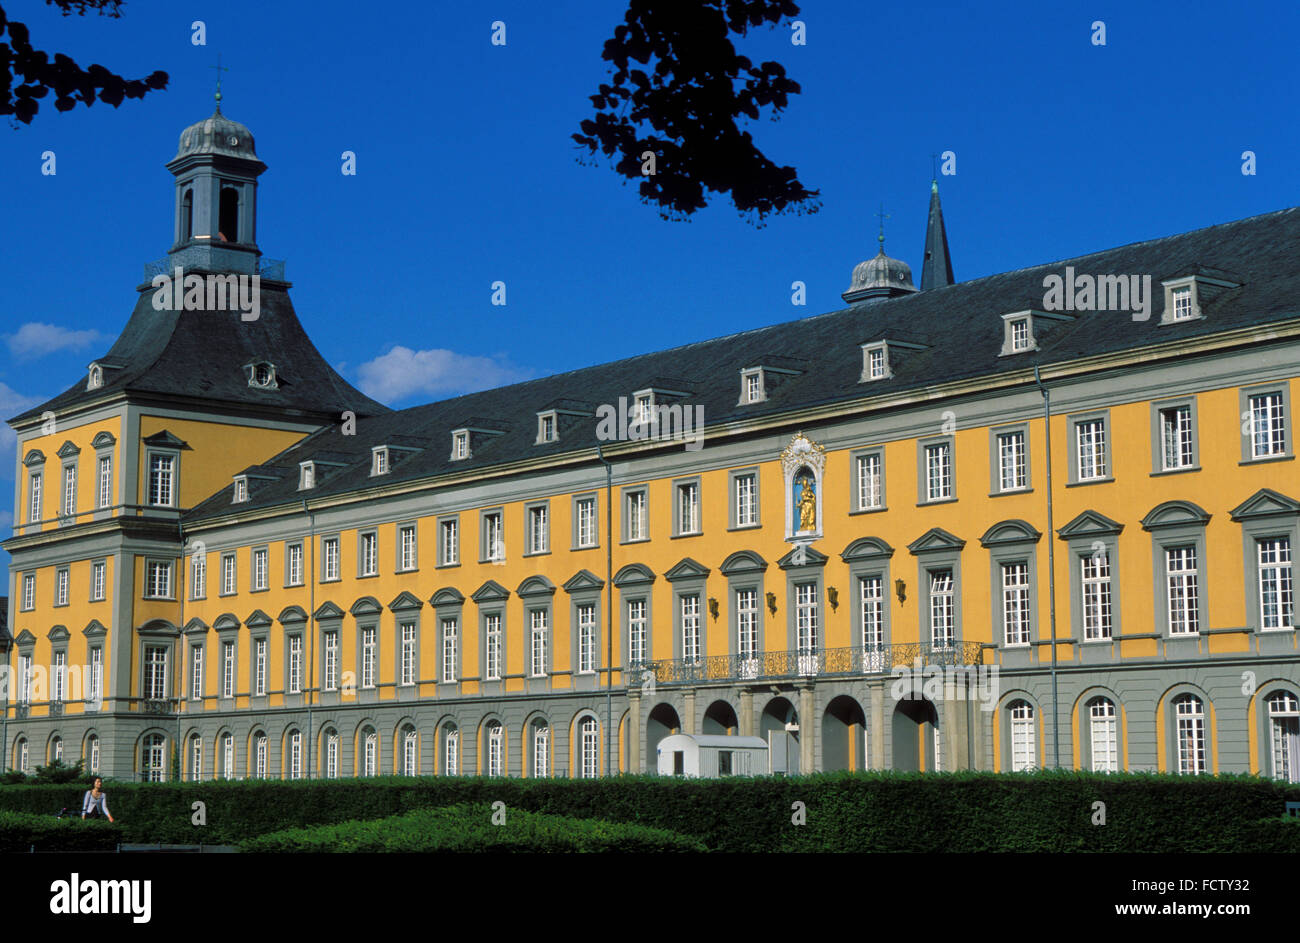 DEU, Allemagne, Bonn, du Hofgarten et de l'université. DEU, Deutschland, Bonn, Universität und Hofgarten. Banque D'Images